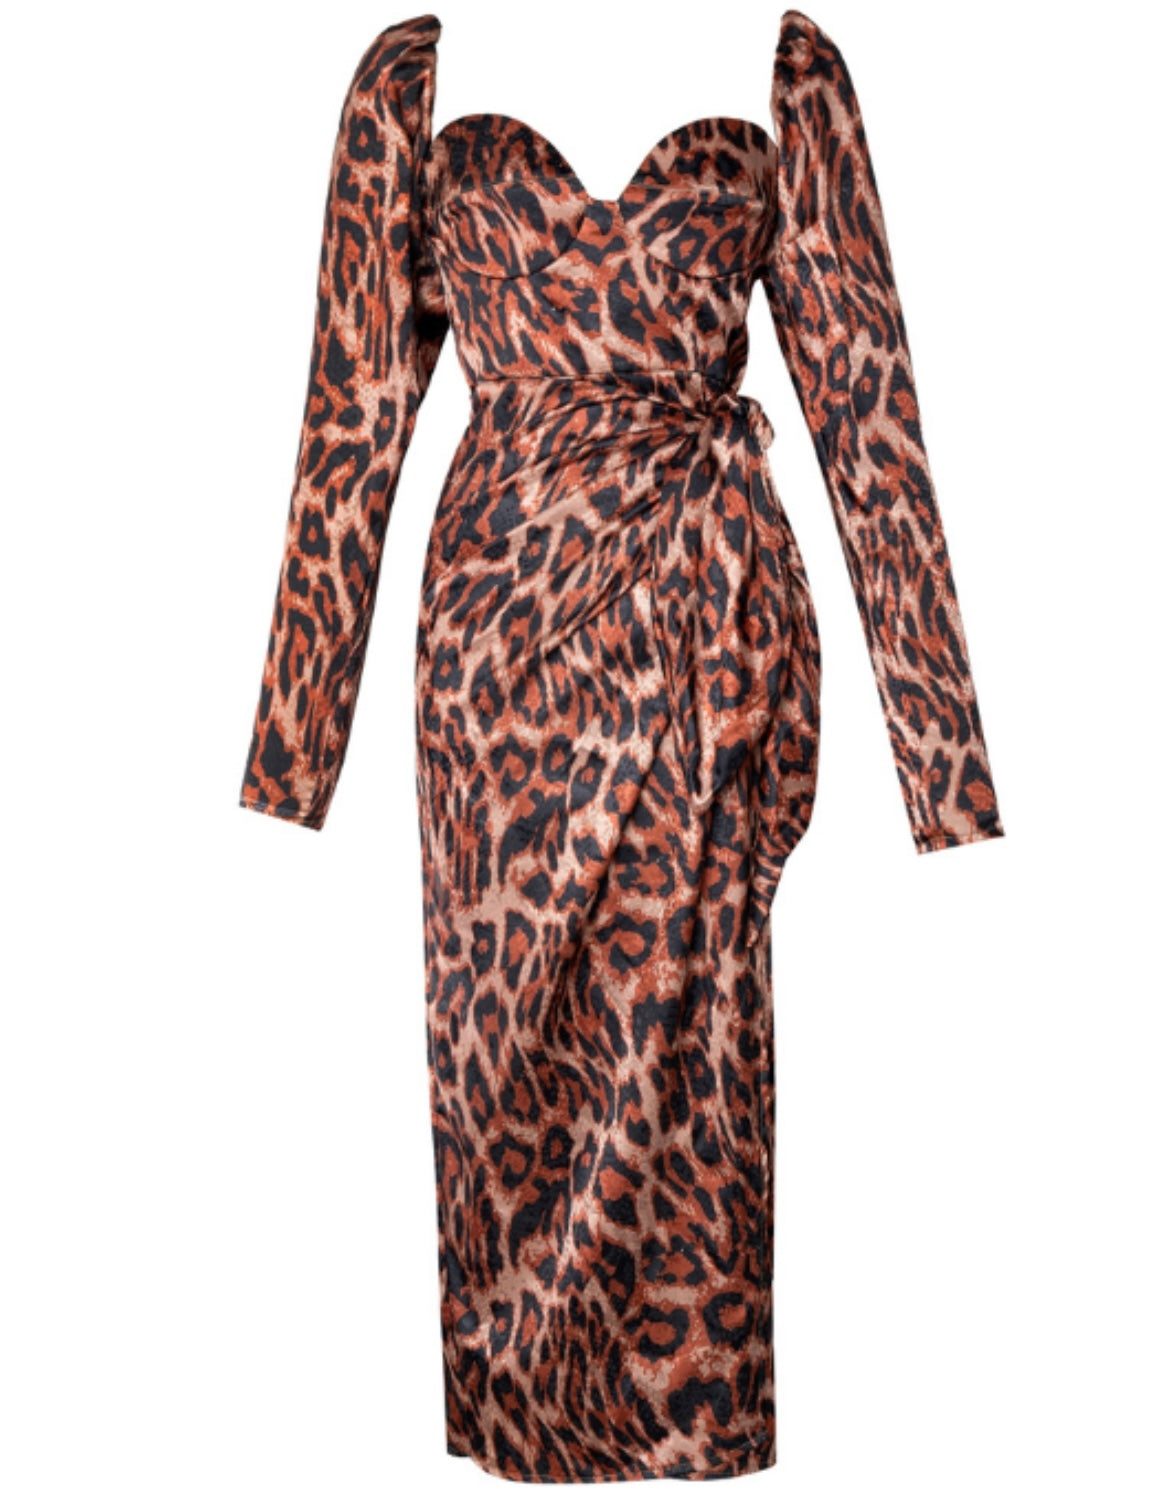 Diana Leopard Dress